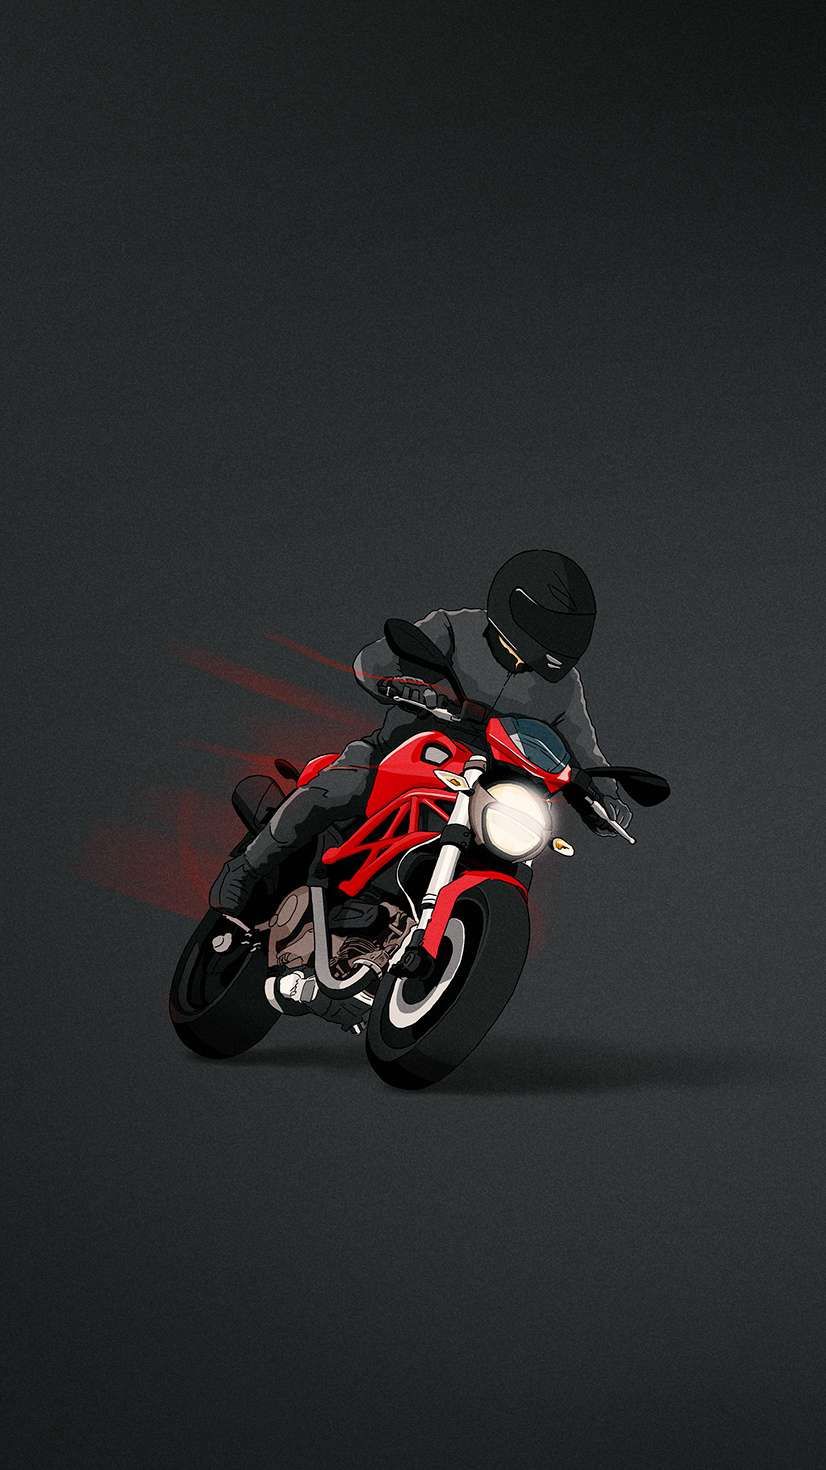 Ducati Monster. Ducati monster, Bike drawing, Bike illustration